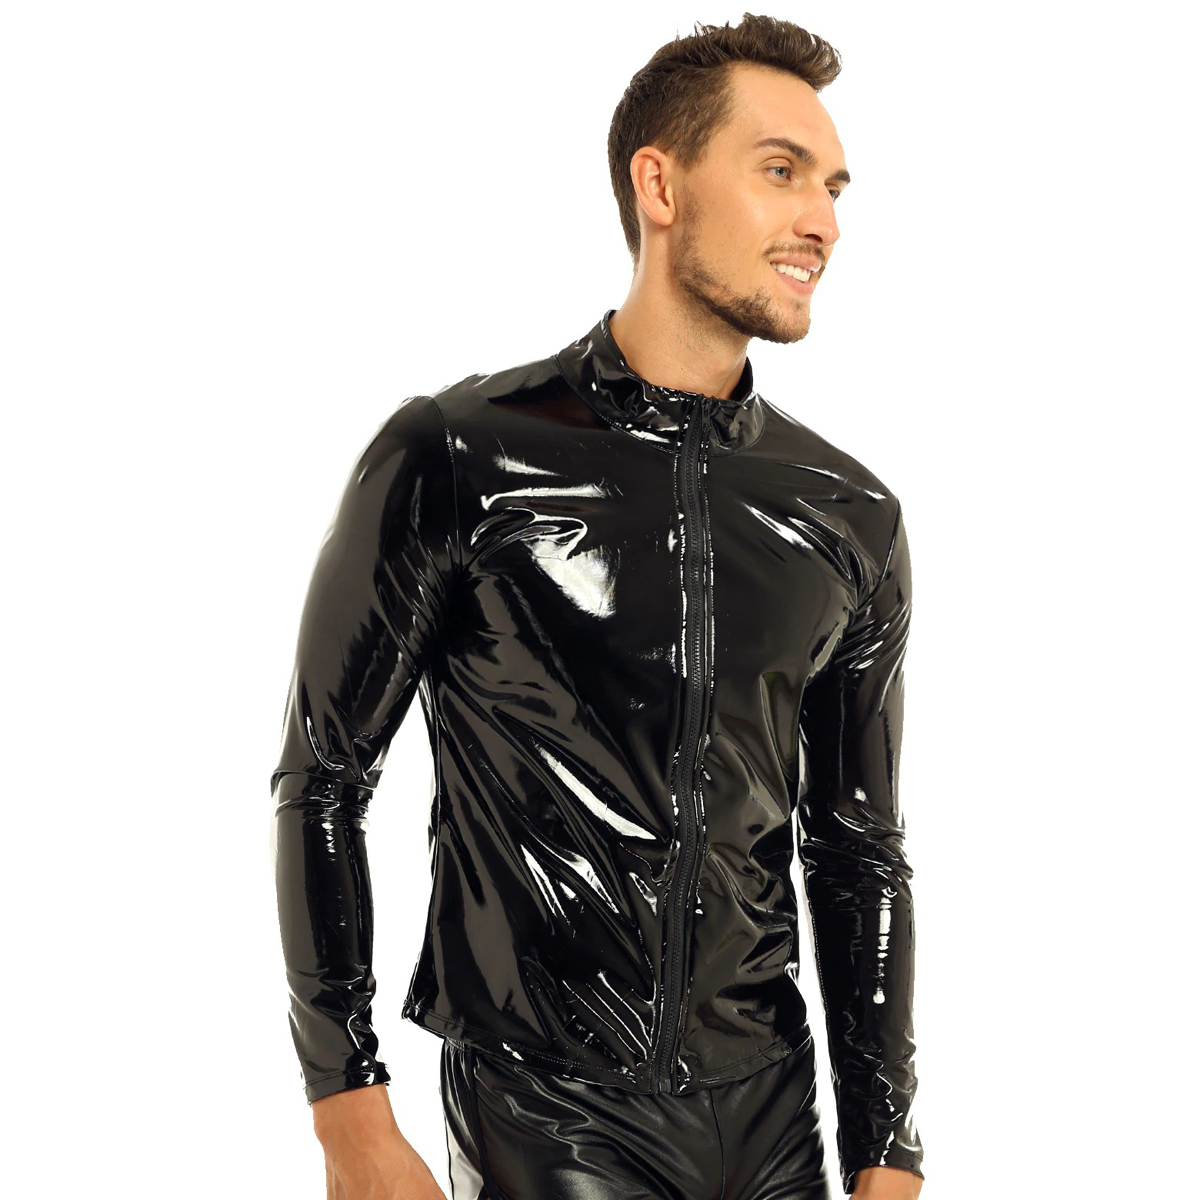 Men's Wet Look Jacket on Zipper / Patent Leather Erotic Costume for Sex Games - EVE's SECRETS